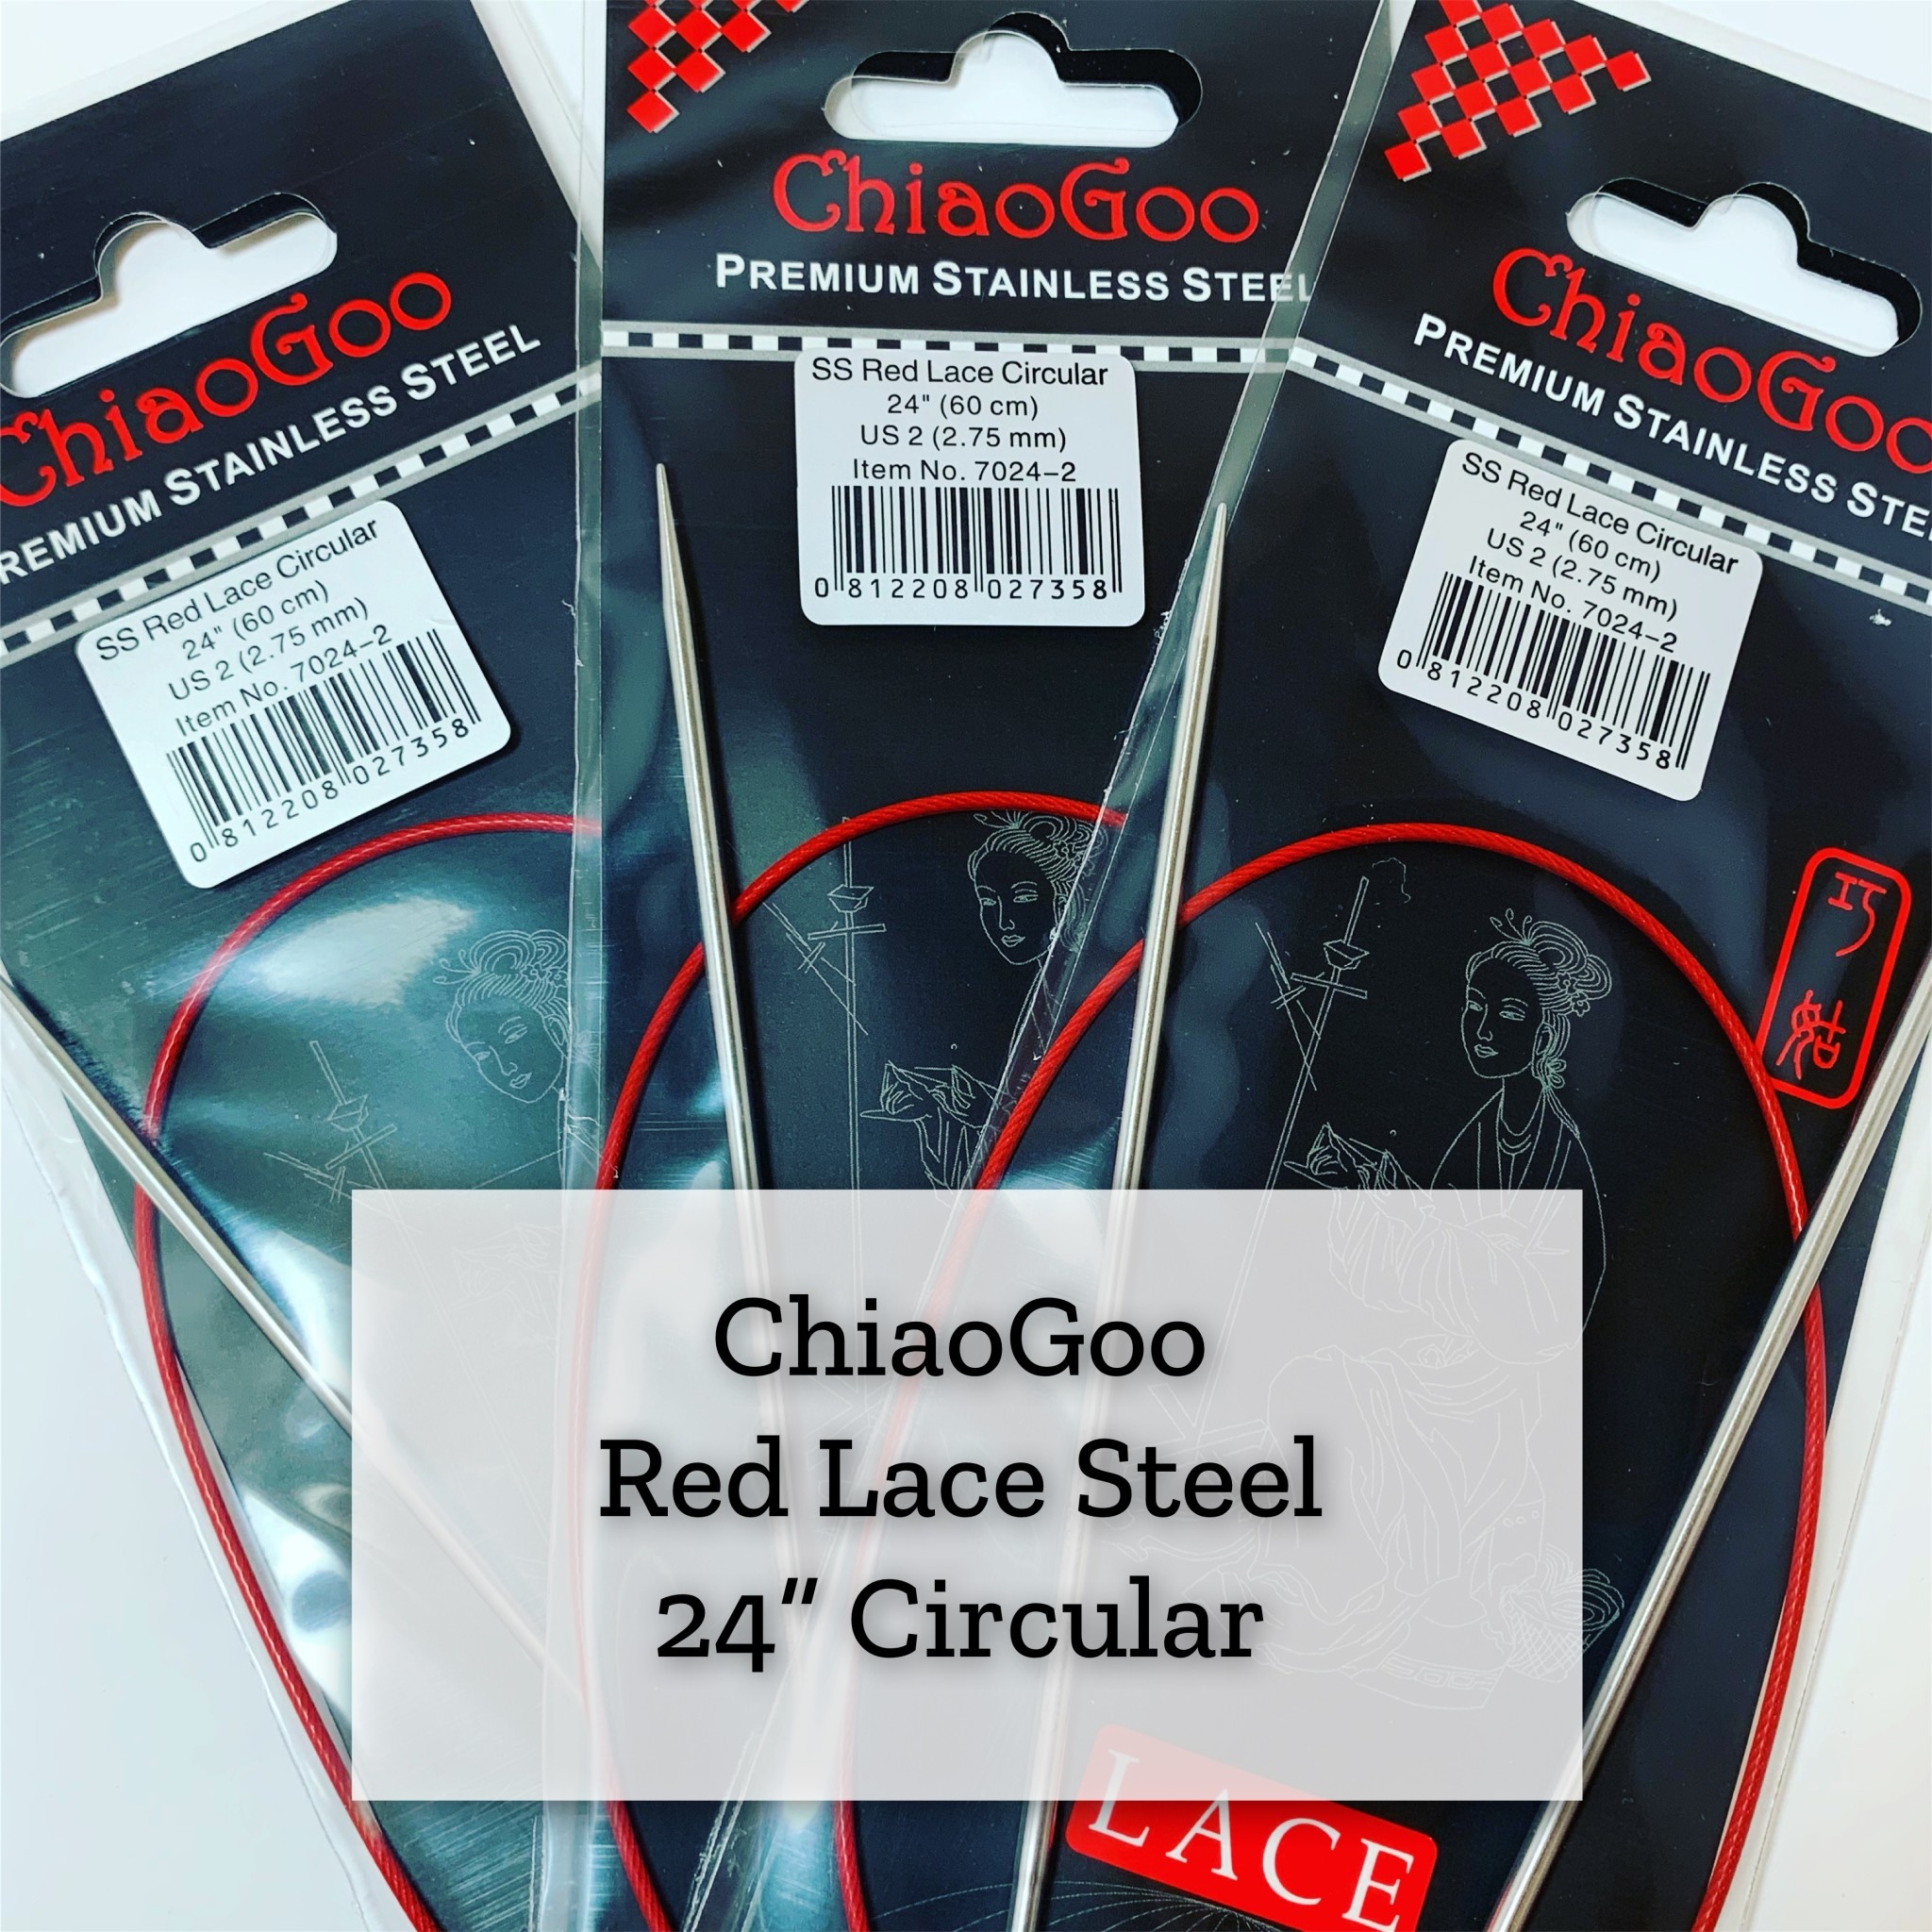 ChiaoGoo Red Lace Steel - 24" 6 mm